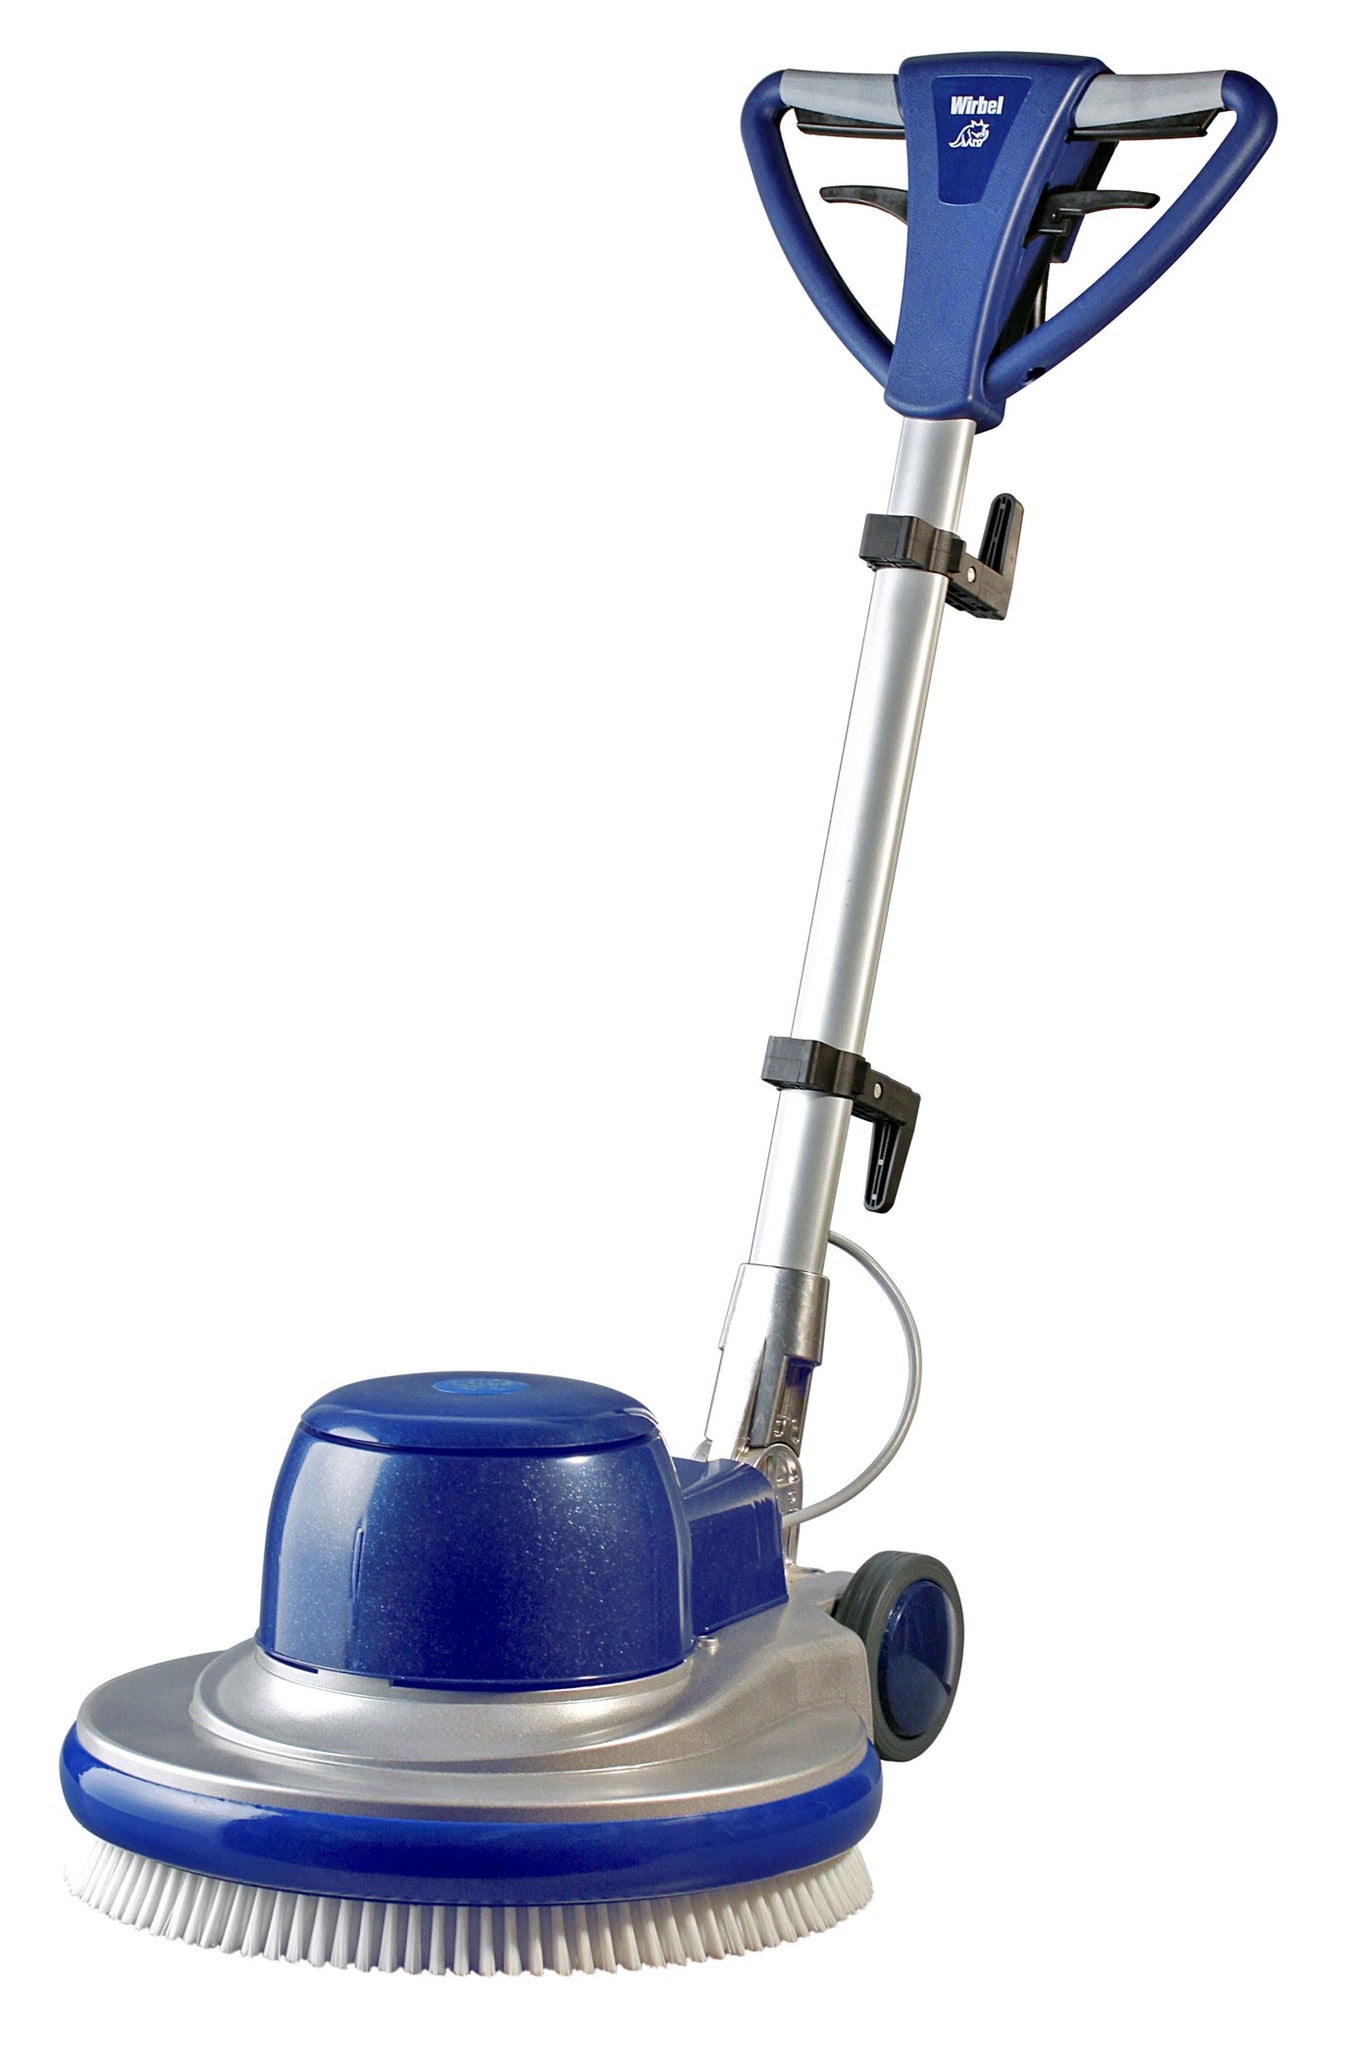 Prochem GH3142 Floor Pro H16 High Speed Rotary Carpet & Floor Cleaning Machine